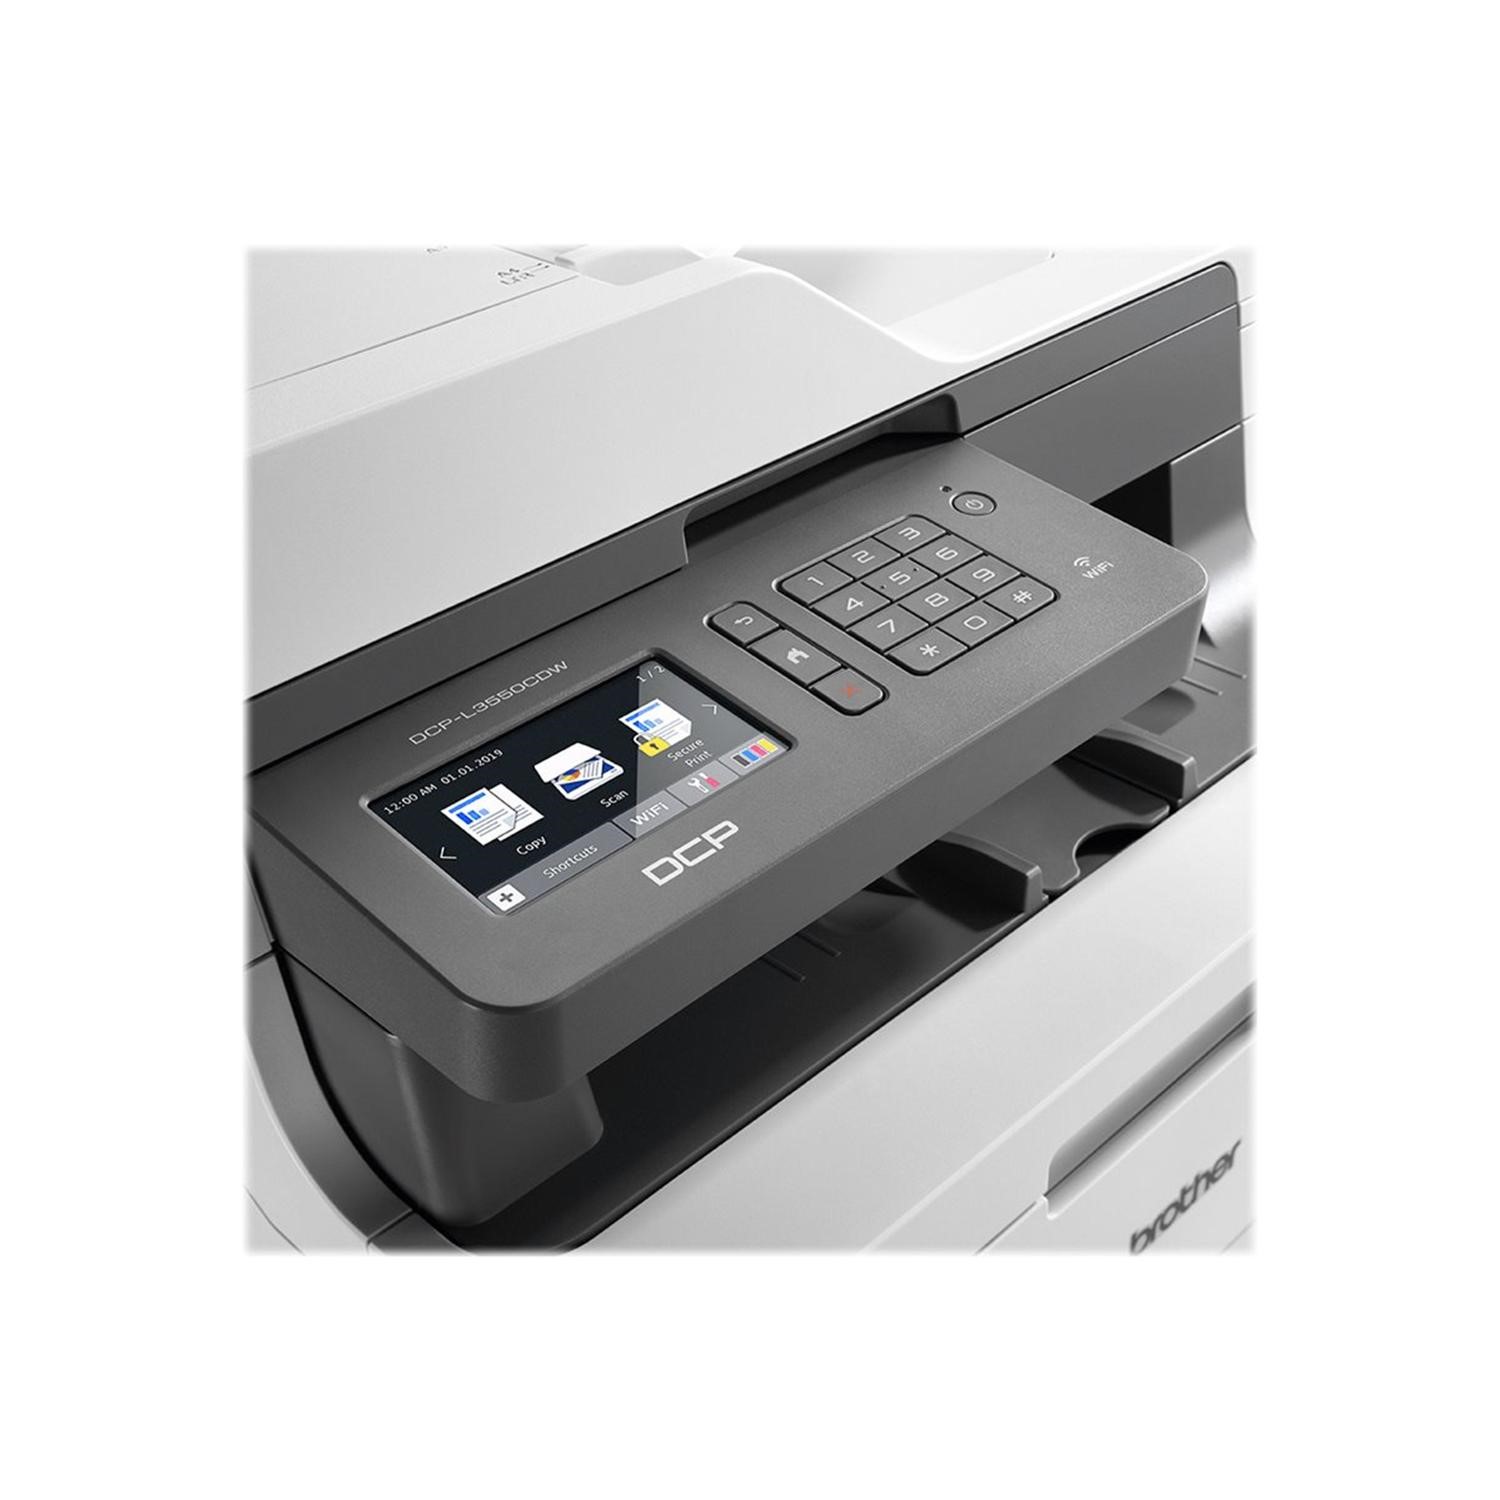 peddelen Promoten Uluru Brother DCP-L3550CDW A4 Multifunction Colour Laser Printer - Laptops Direct